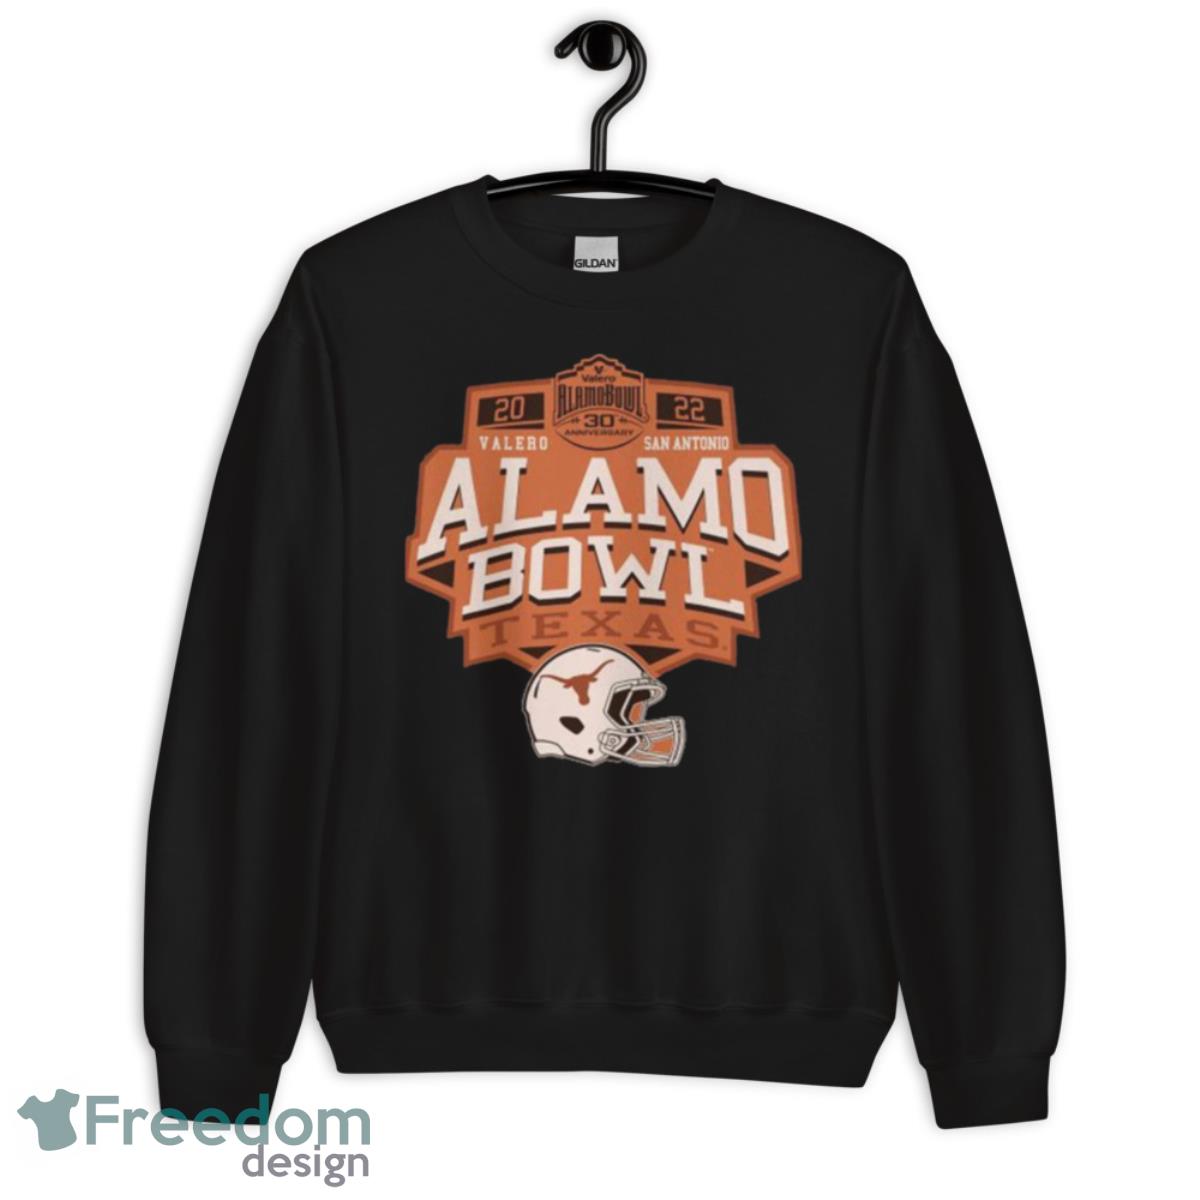 2022 Valero Alamo Bowl Texas Longhorn football shirt